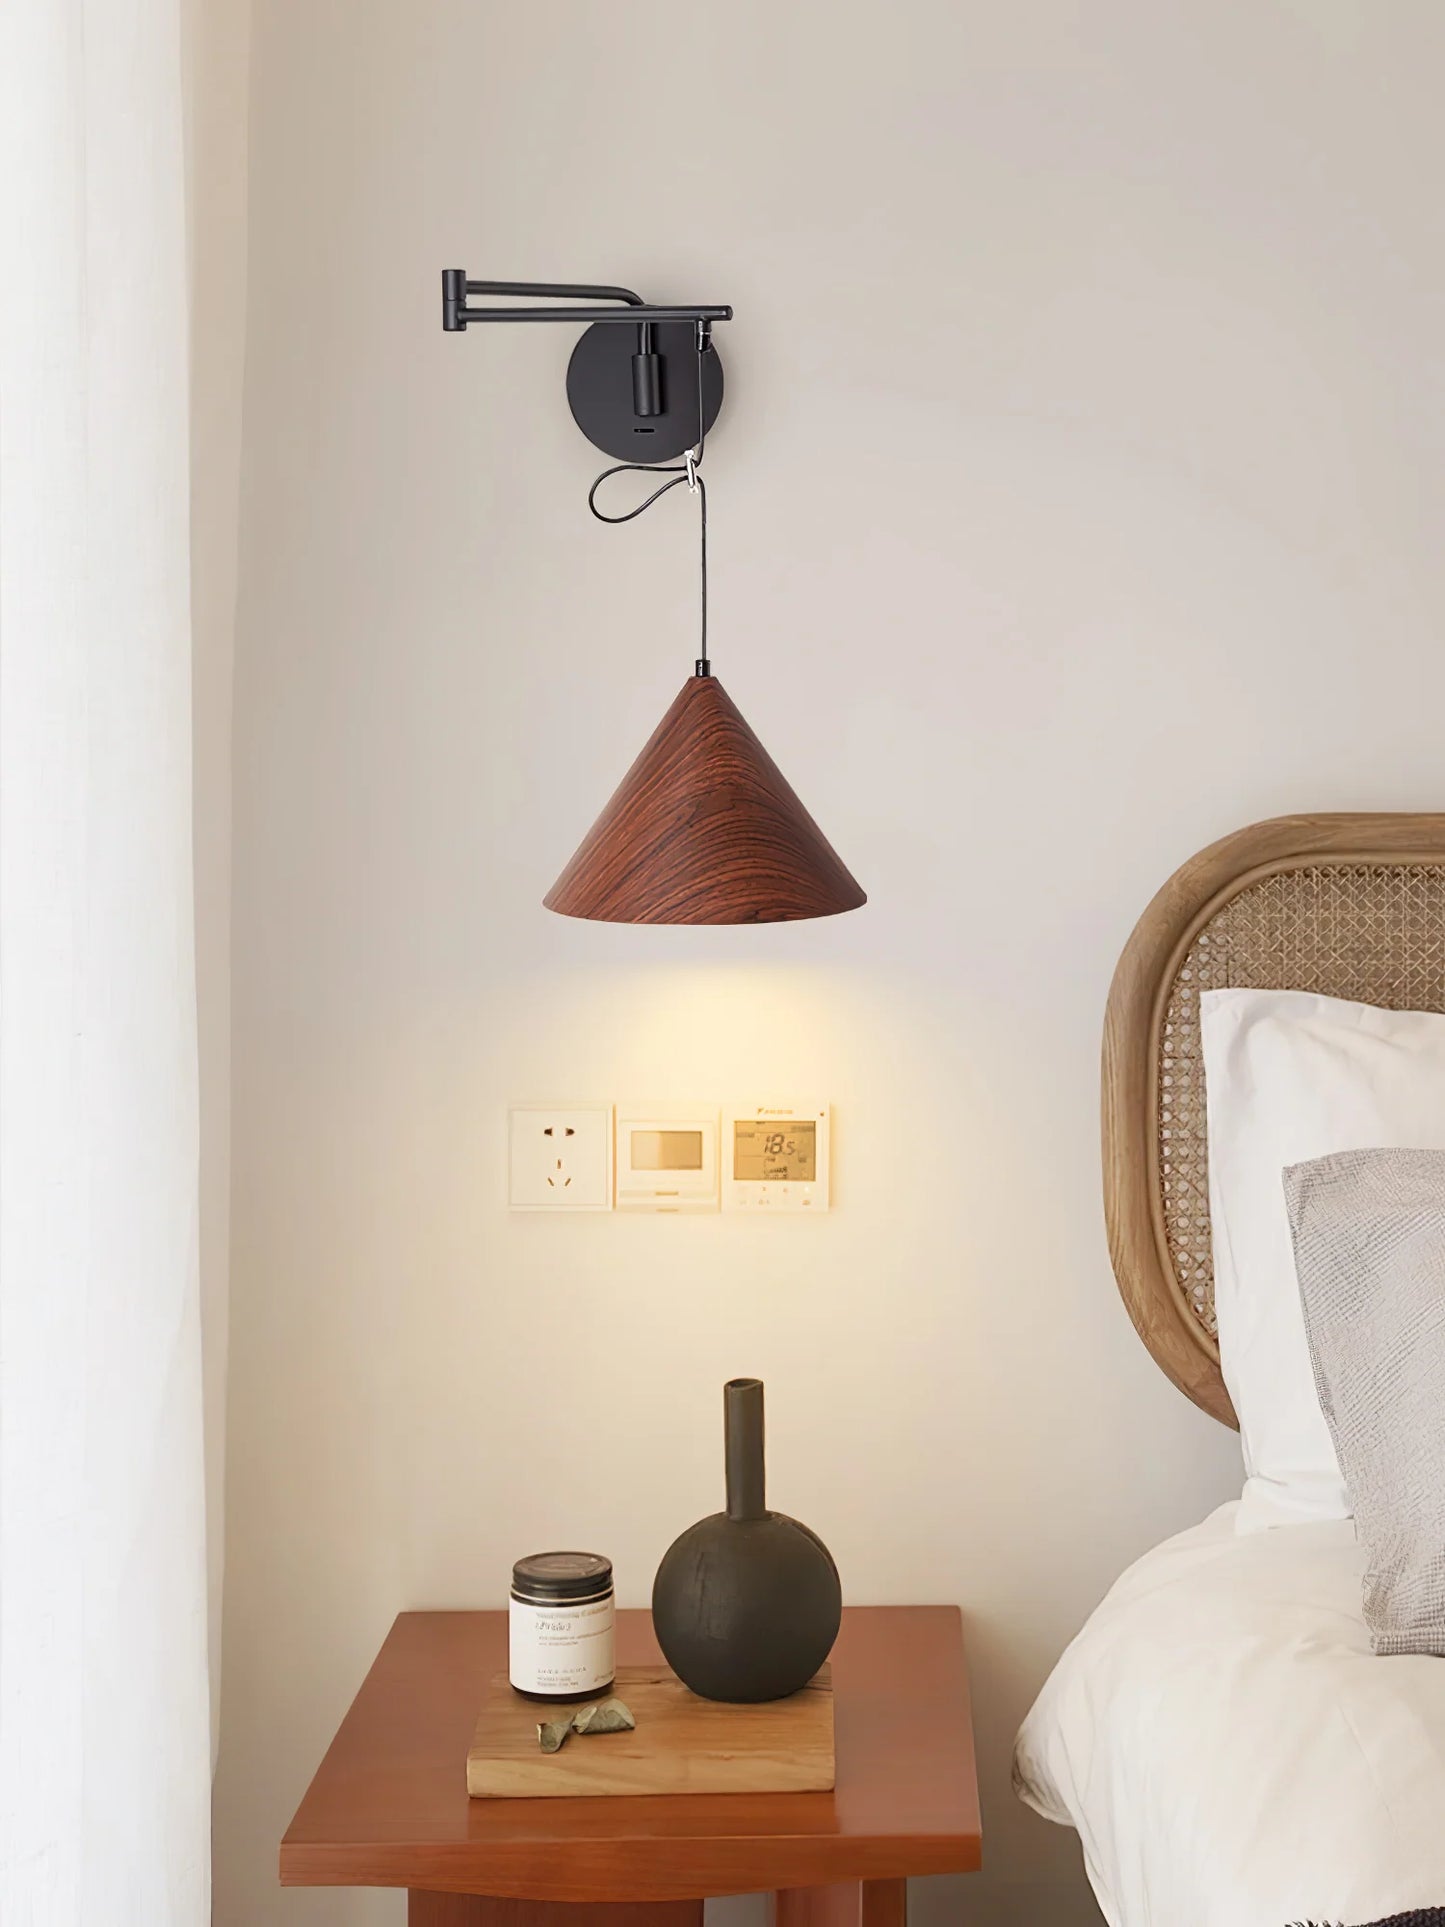 Wood Grain Conical Wall Lamp